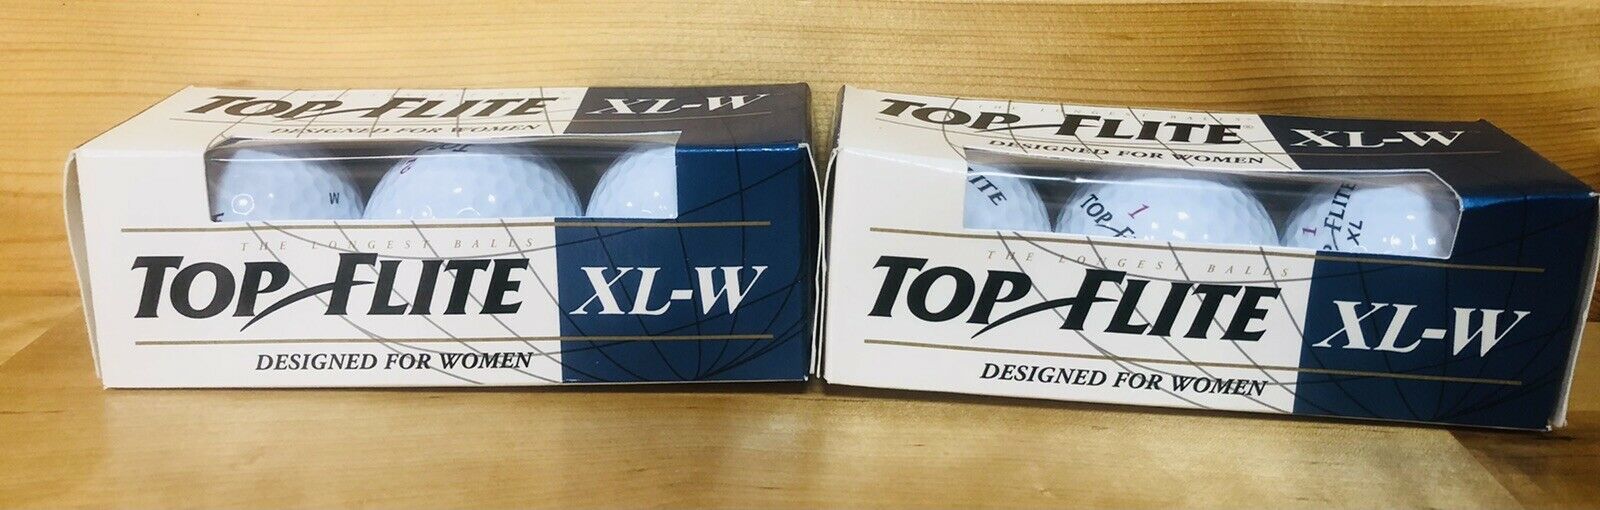 Top Flite Xl-w (3) Golf Balls For Women Vintage 1994 Spalding (2 Packs)